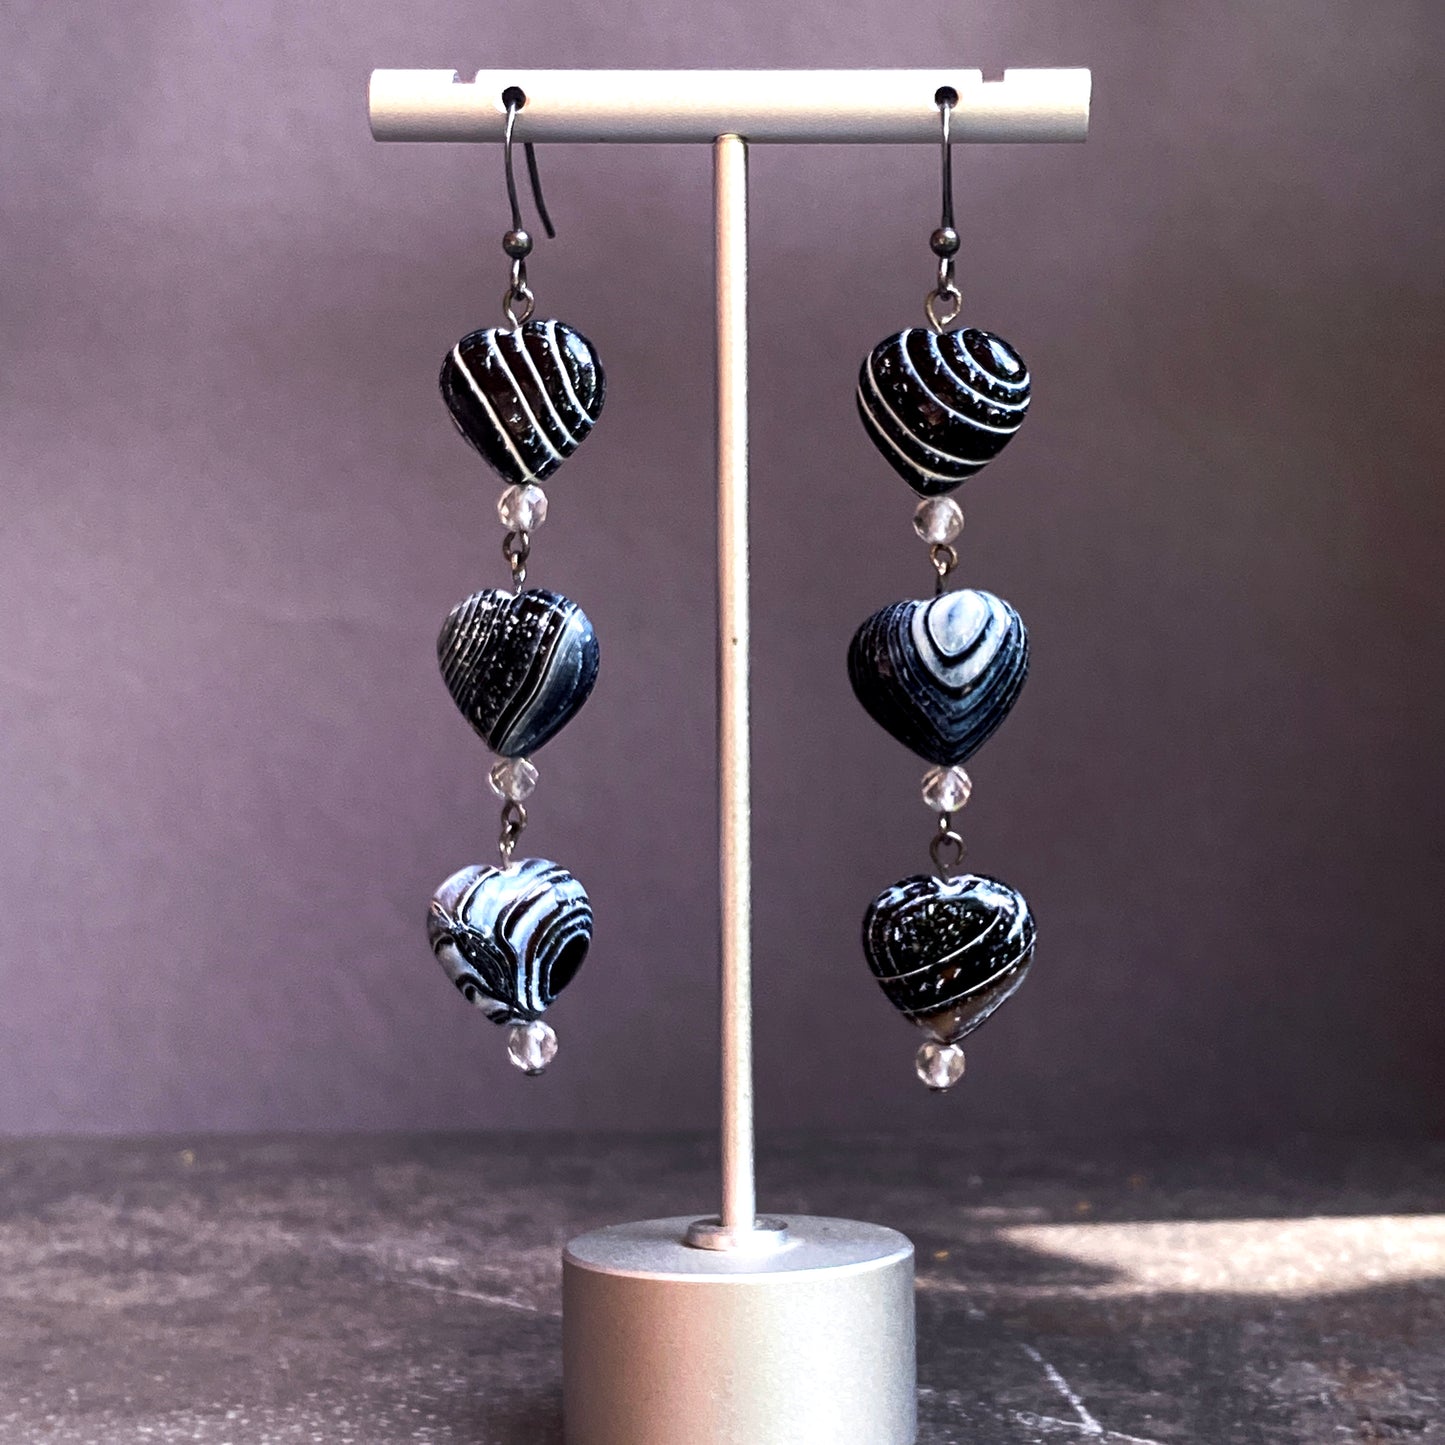 Zebra Fire Agate Heart, White Topaz Gemstones and Oxidized sterling earrings